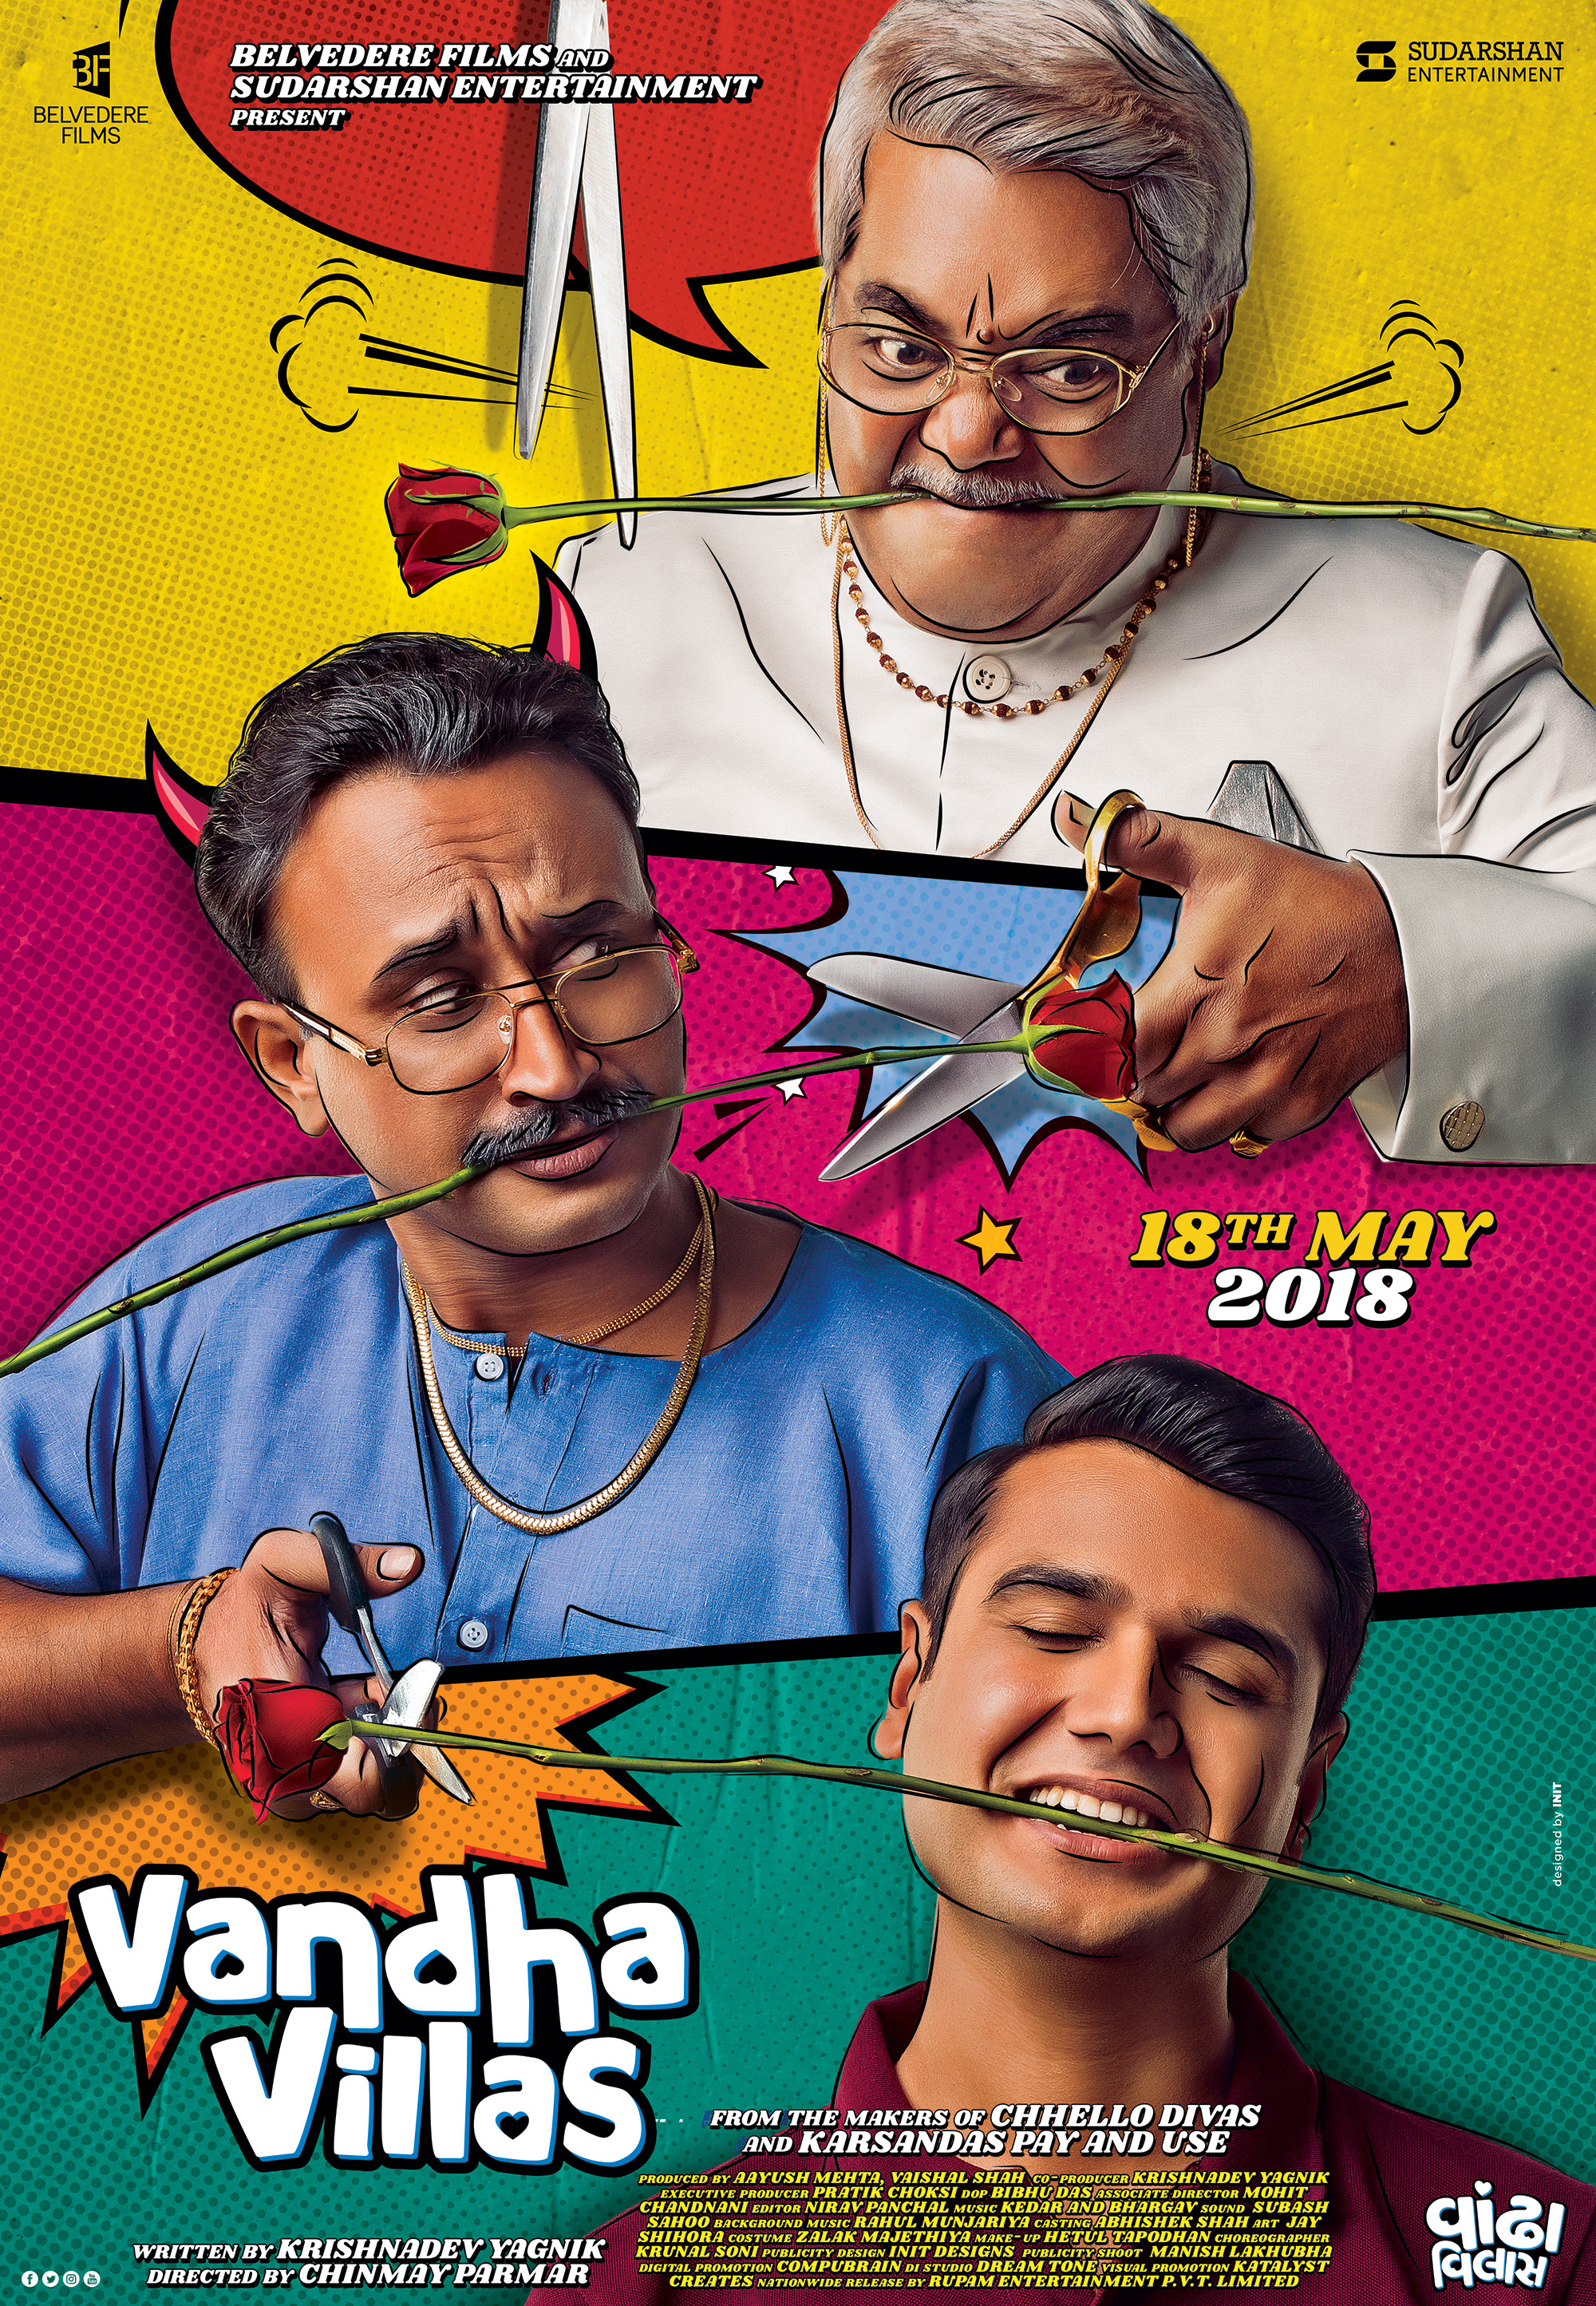 Mega Sized Movie Poster Image for Vandha Villas (#2 of 4)